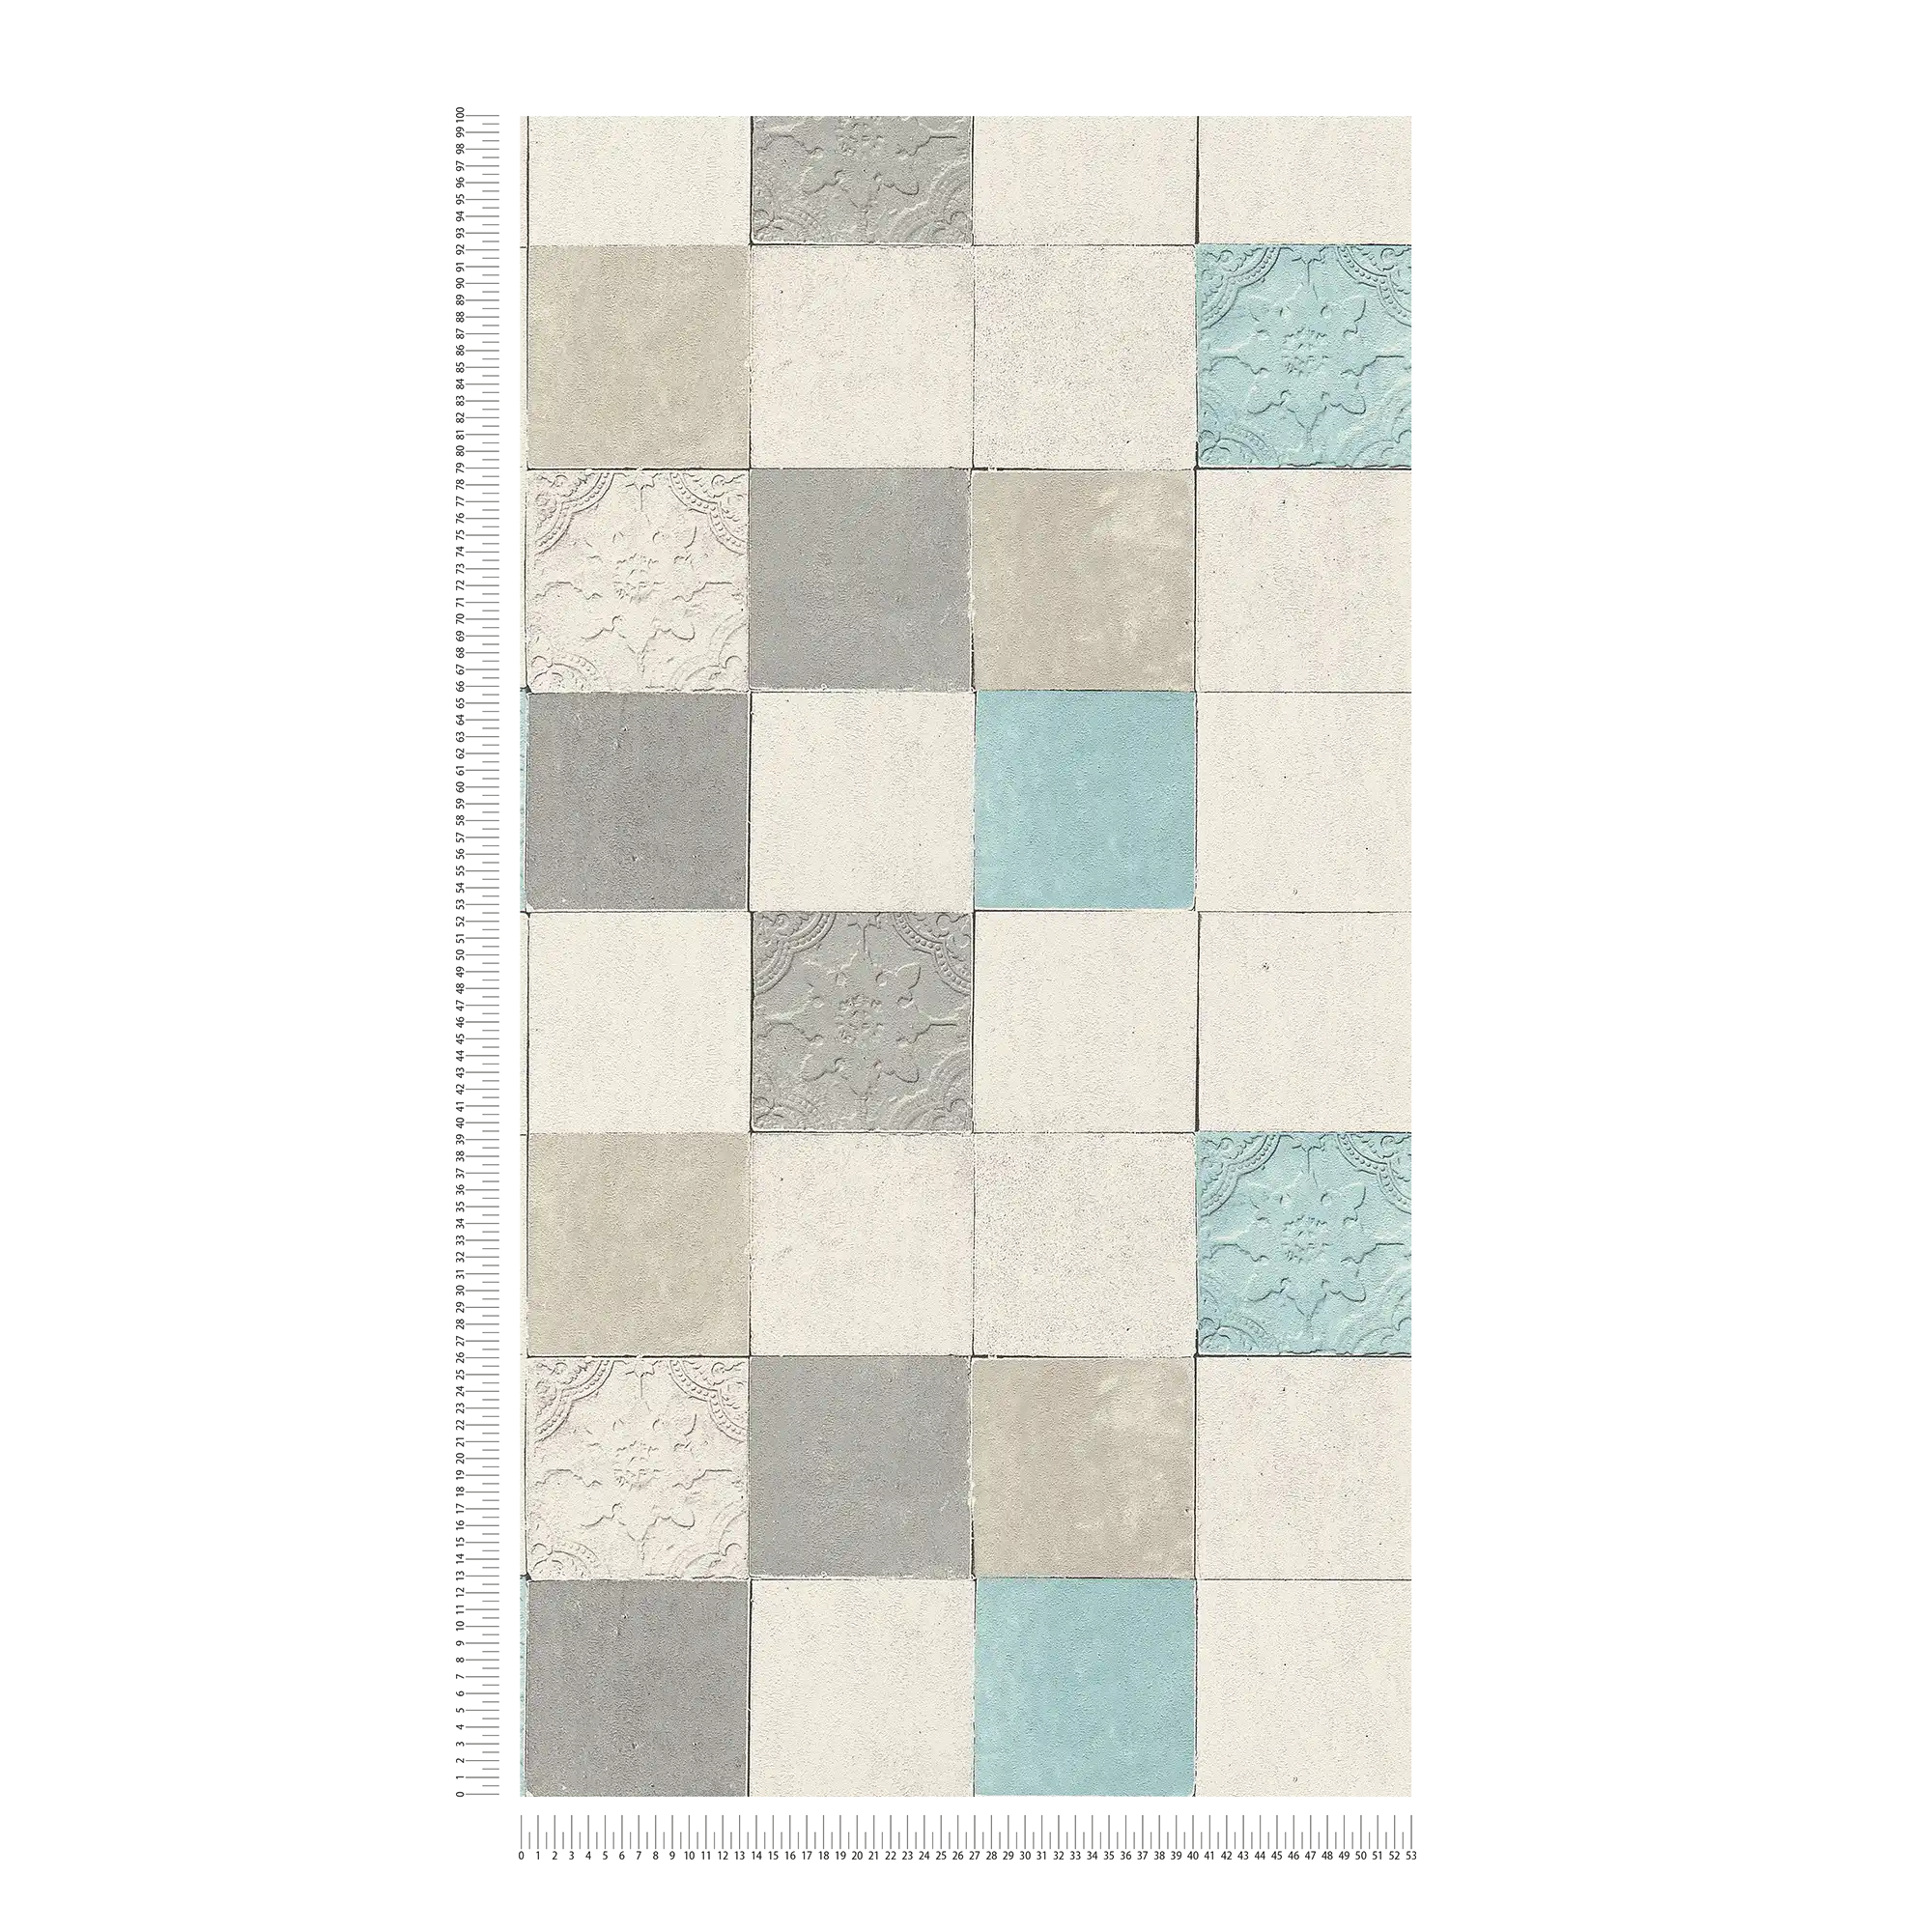             Papel pintado azulejos decorativos mosaico - gris, azul, crema
        